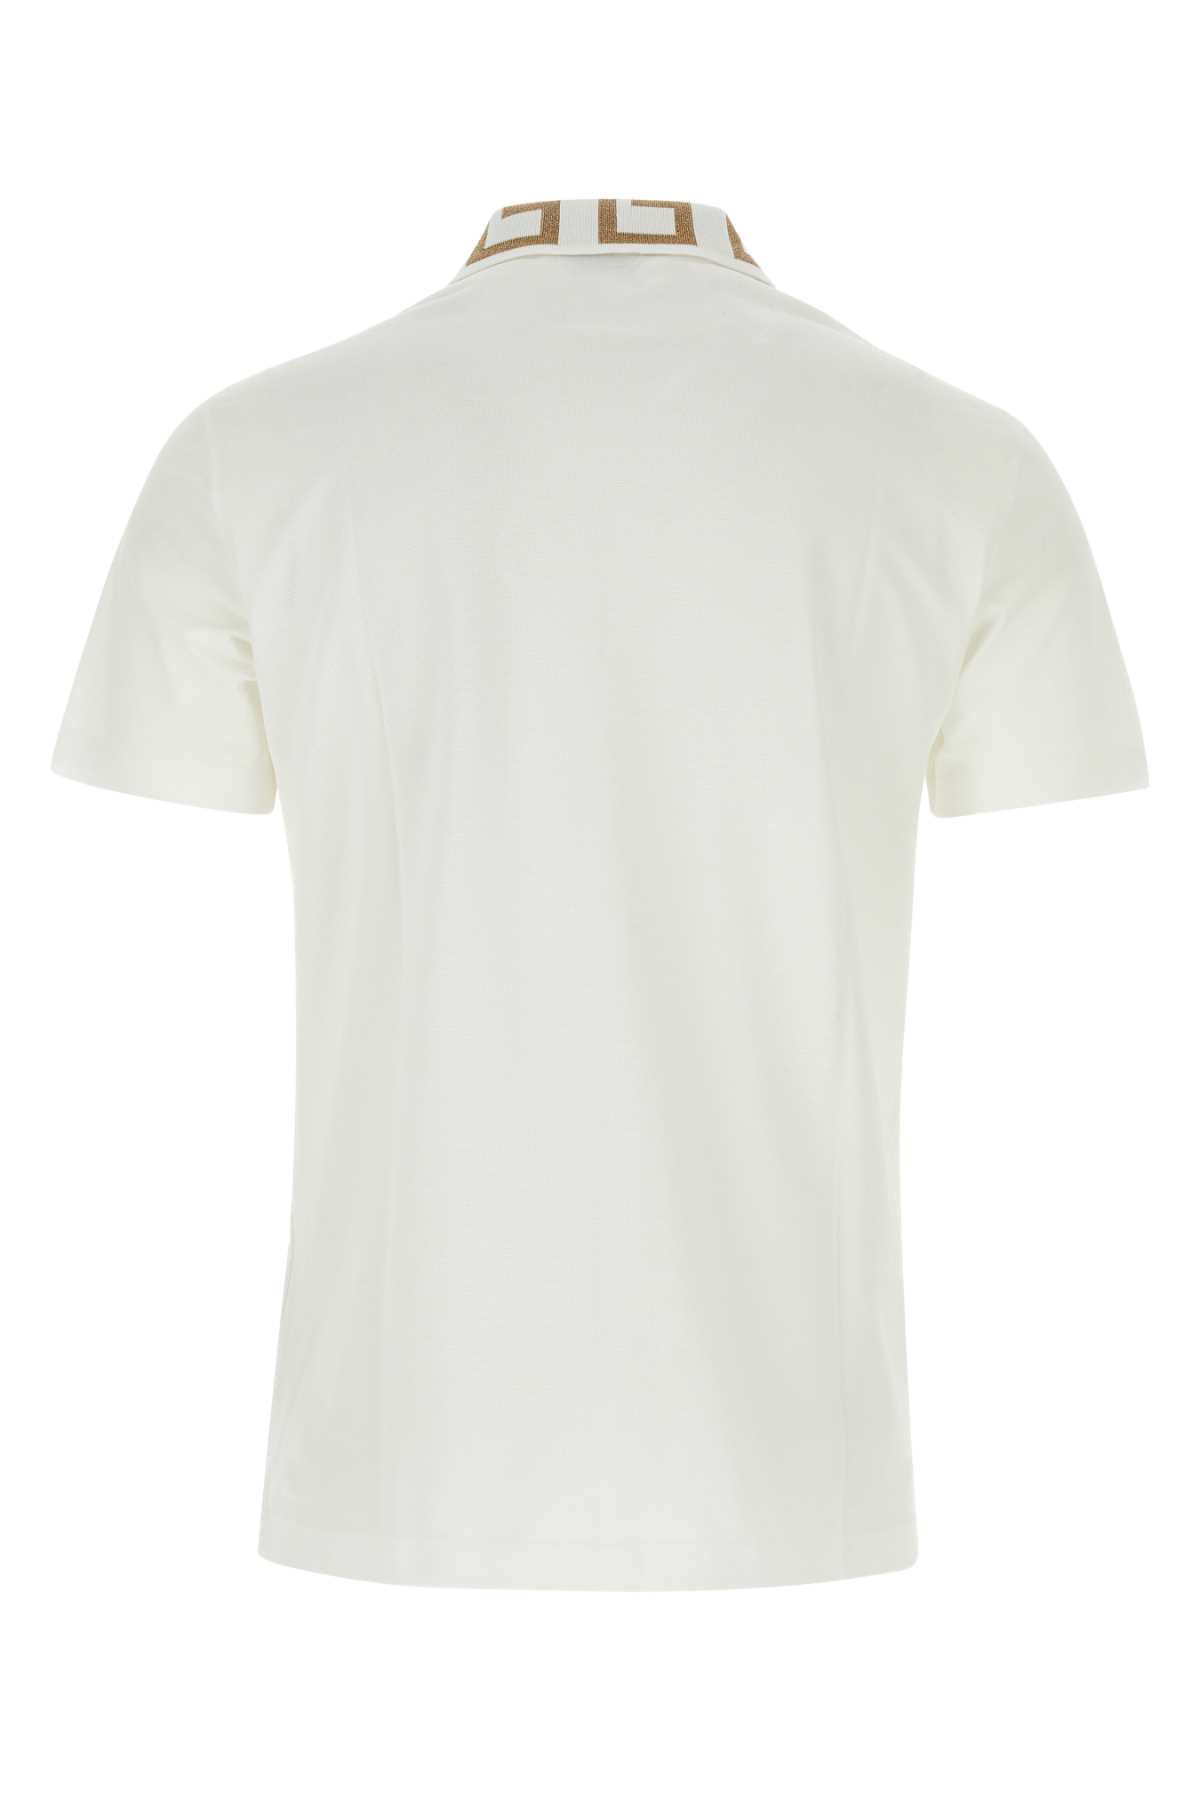 Versace White Piquet Polo Shirt In 1w000